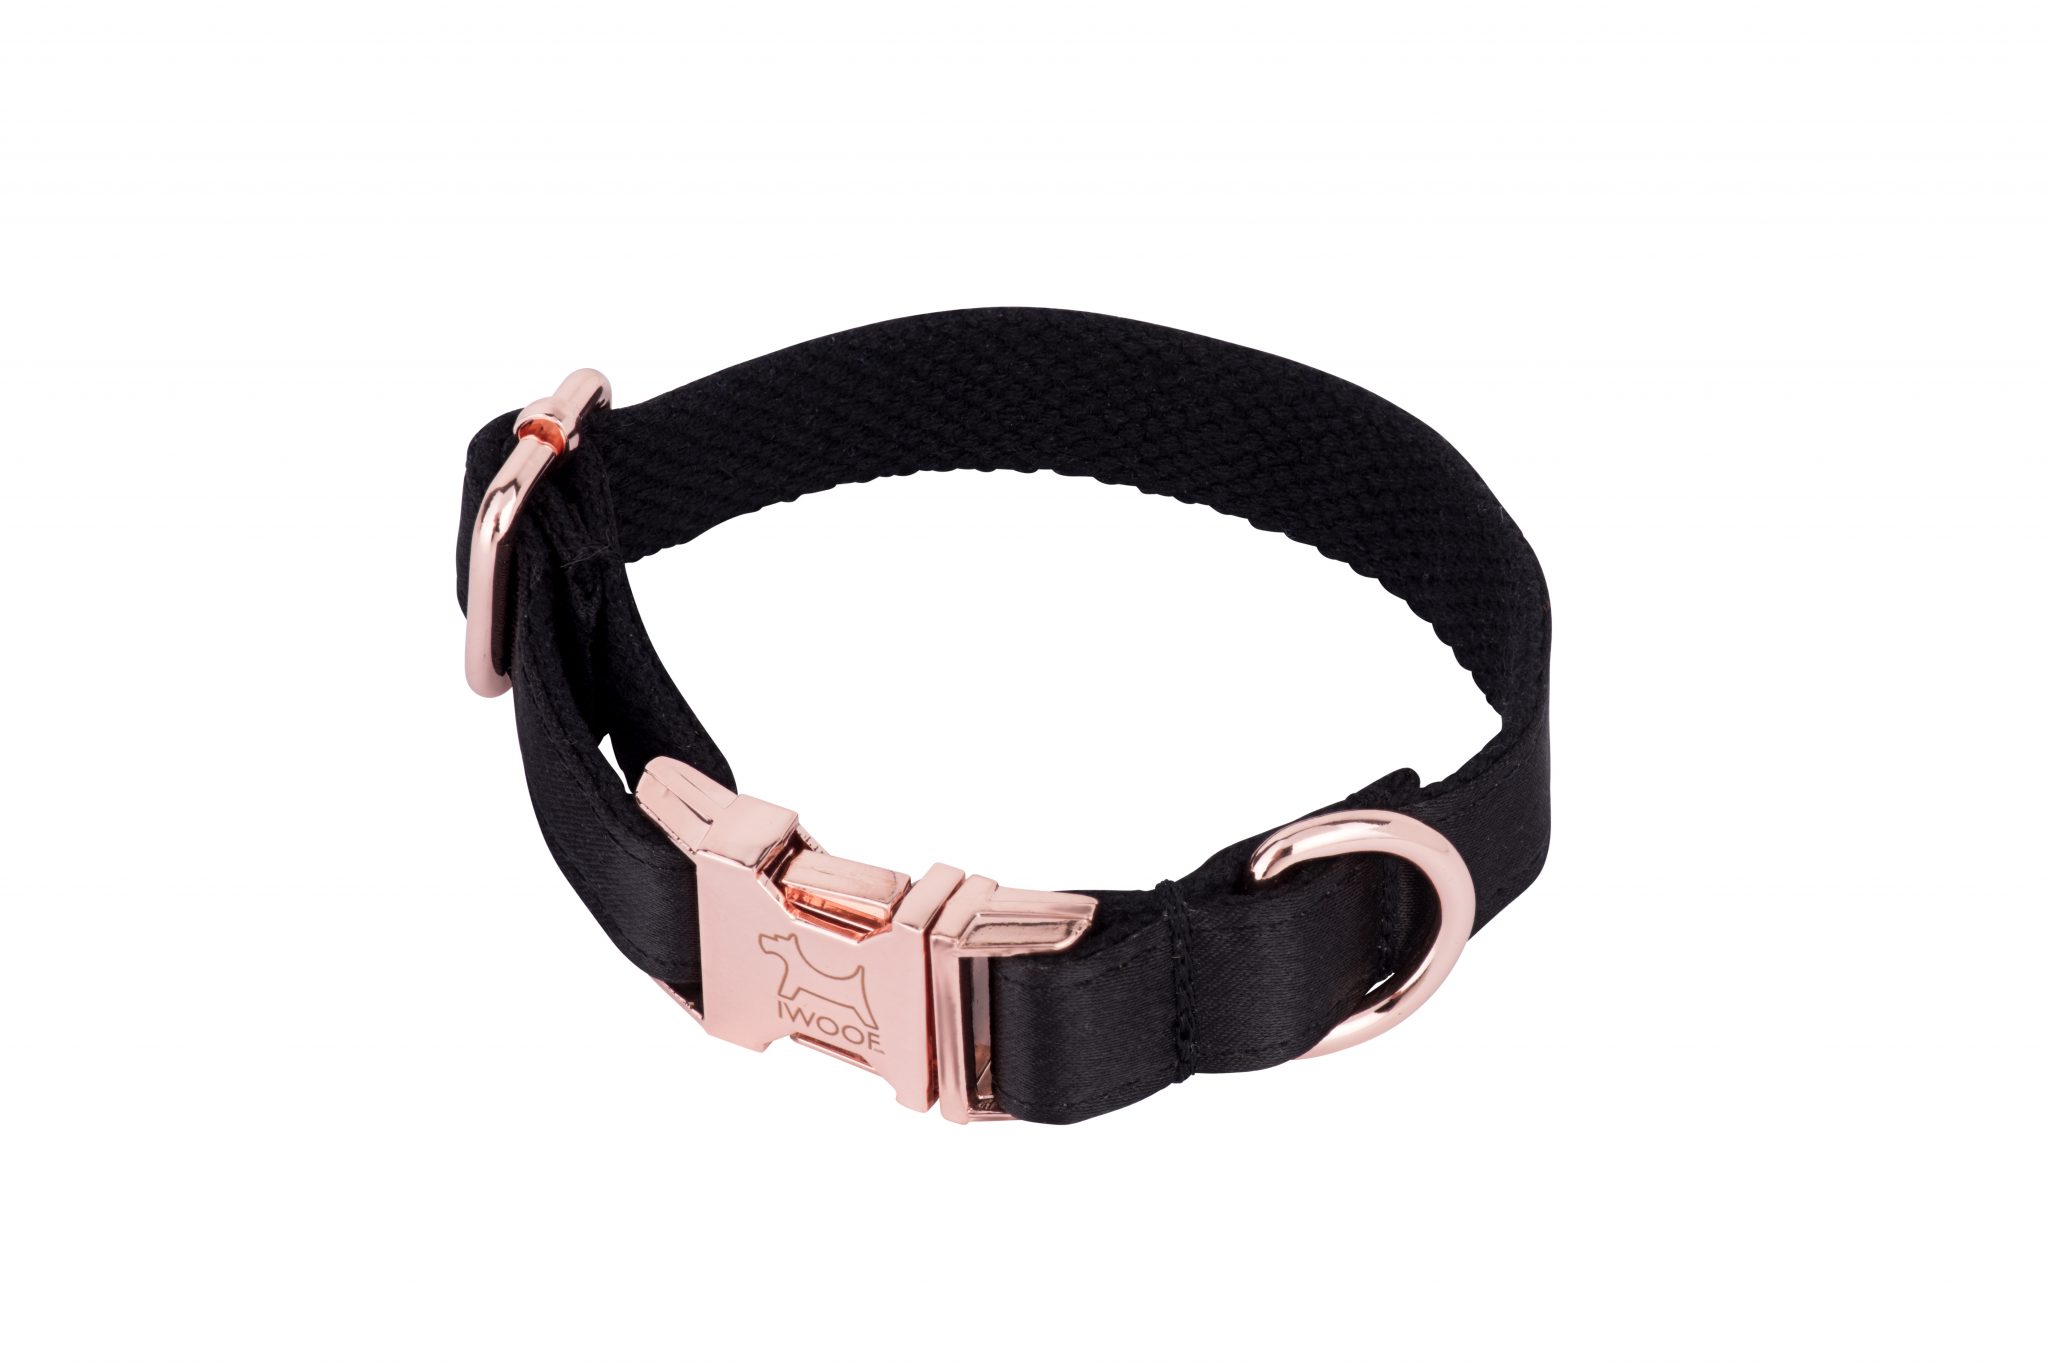 Black on Gold designer dog collar and matching designer dog lead by IWOOF